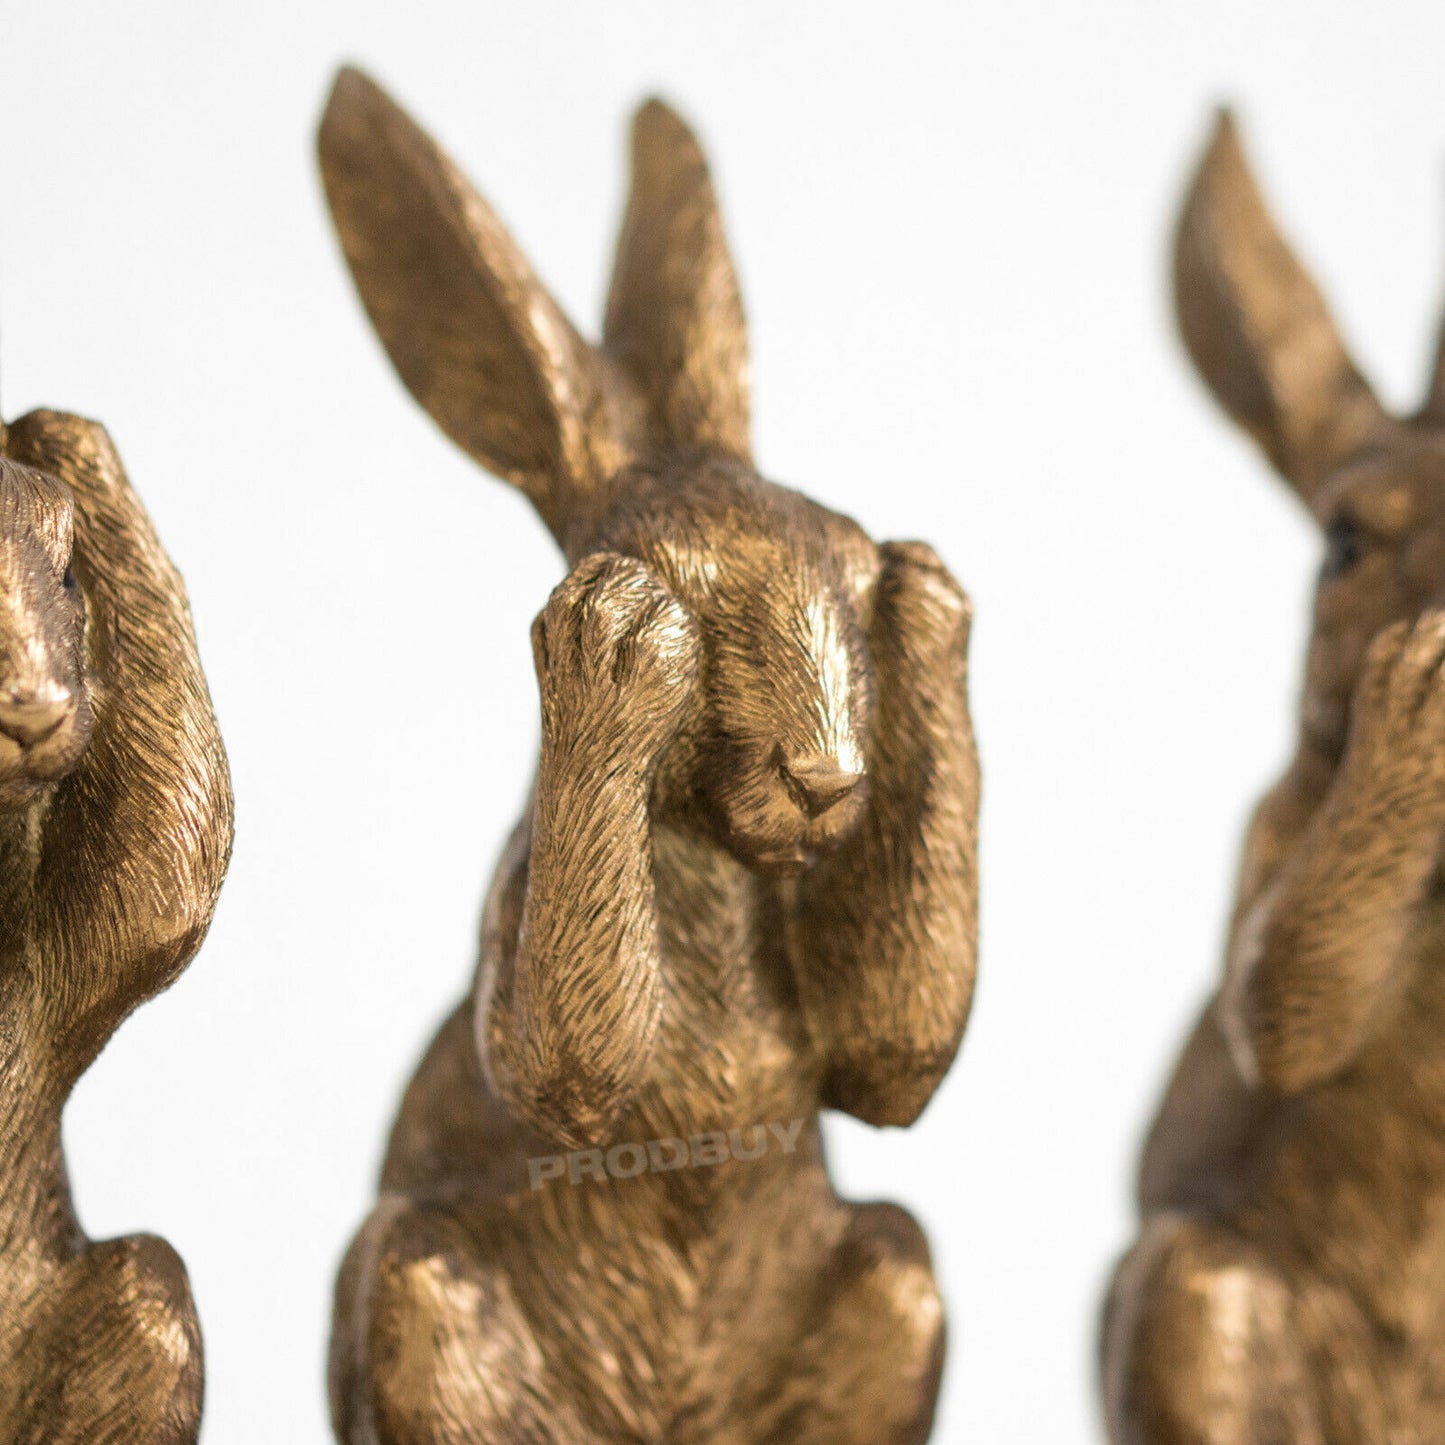 Bronze 3 Wise Hares Ornament See Speak Hear No Evil